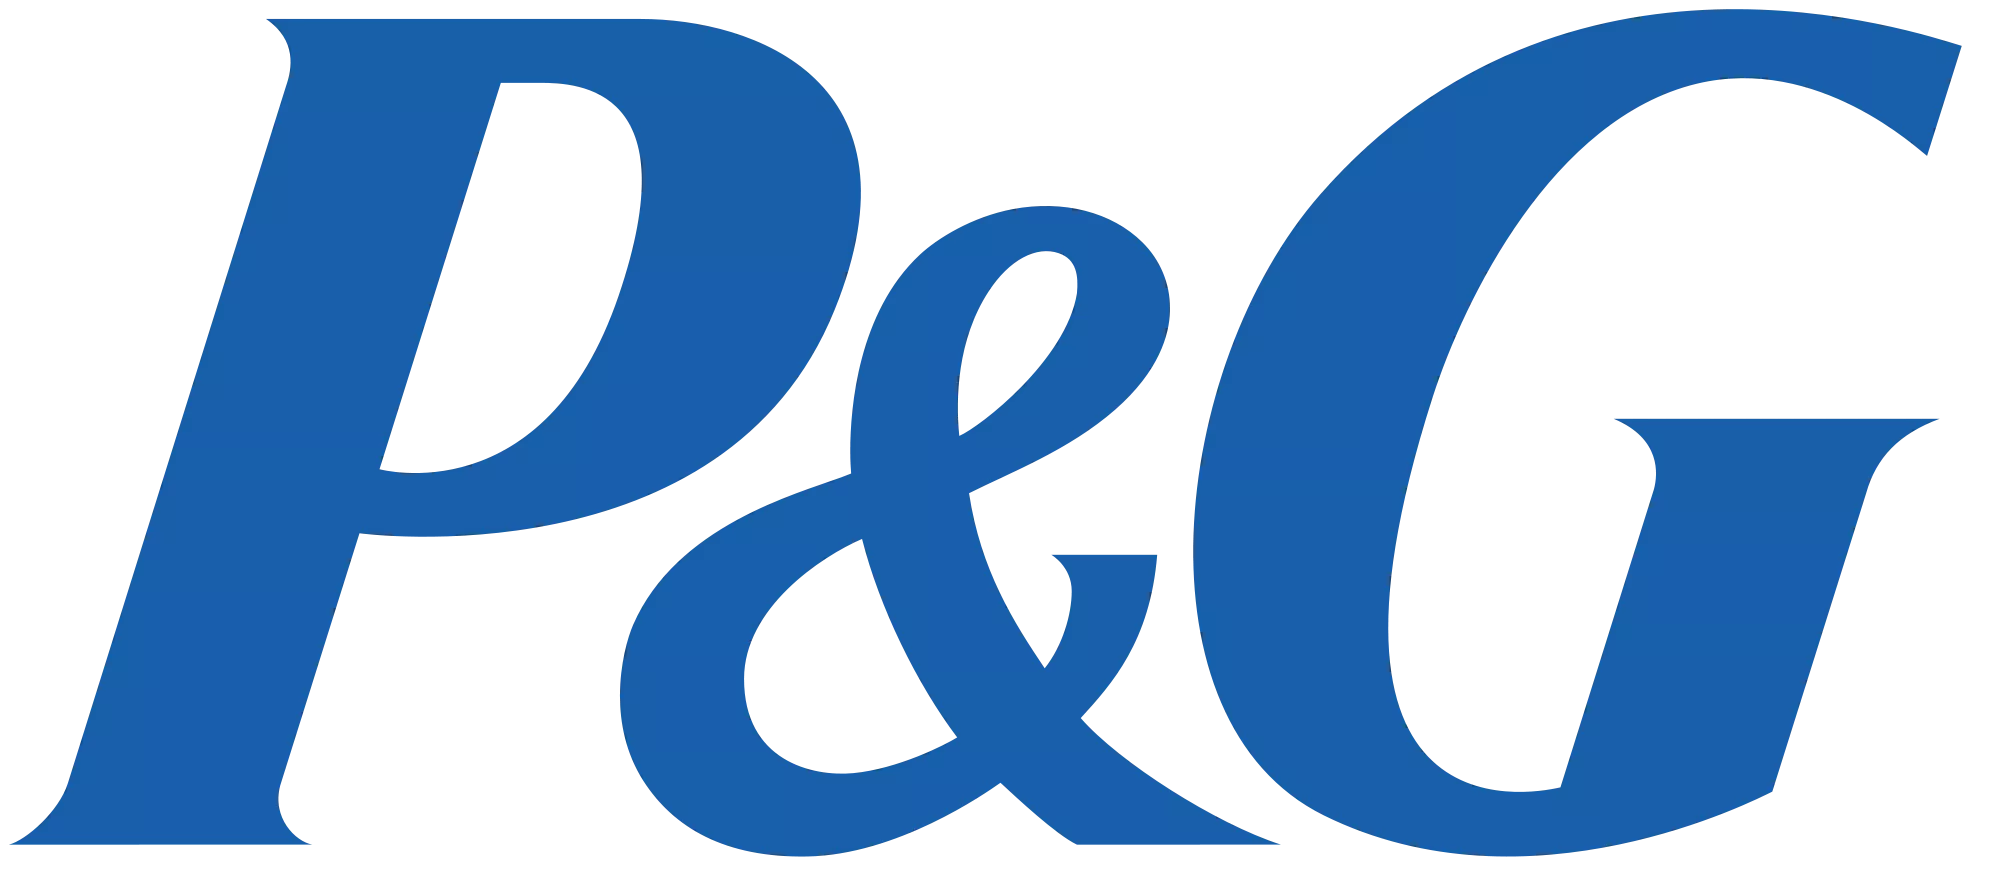 P&G Procter & Gamble logo & Ohana & co